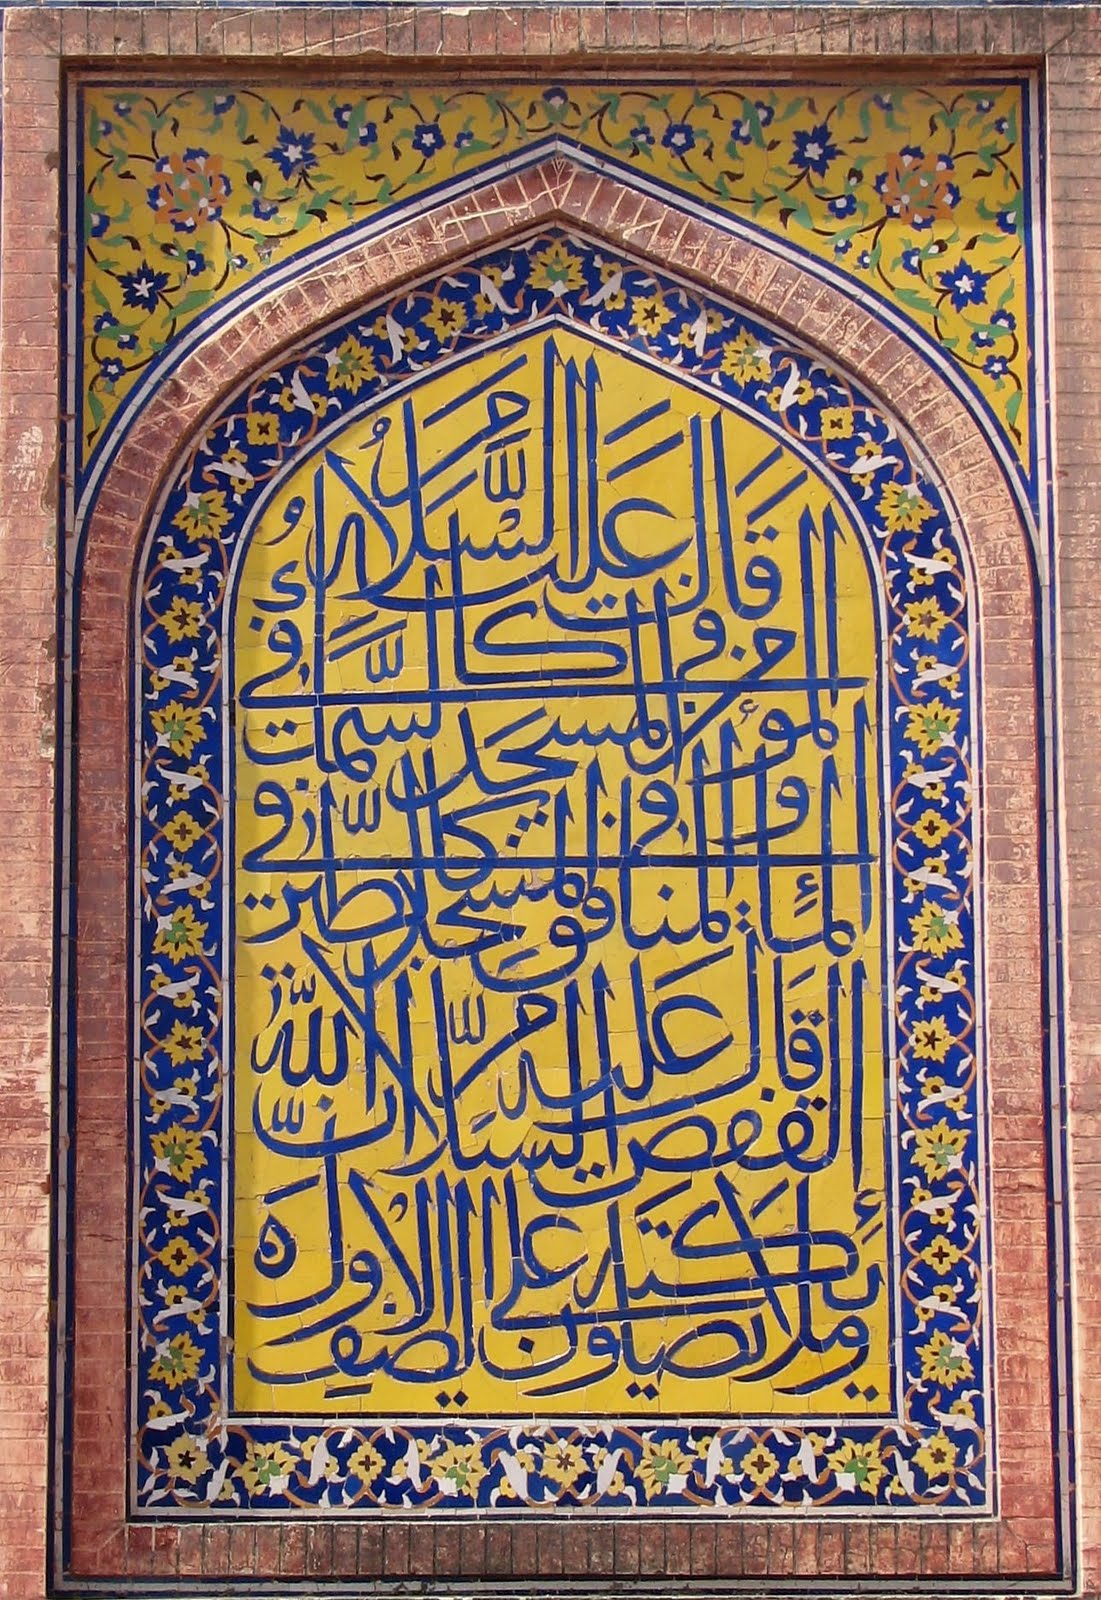 Islamic History And Islamic Wallpaper: Islamic Calligraphy